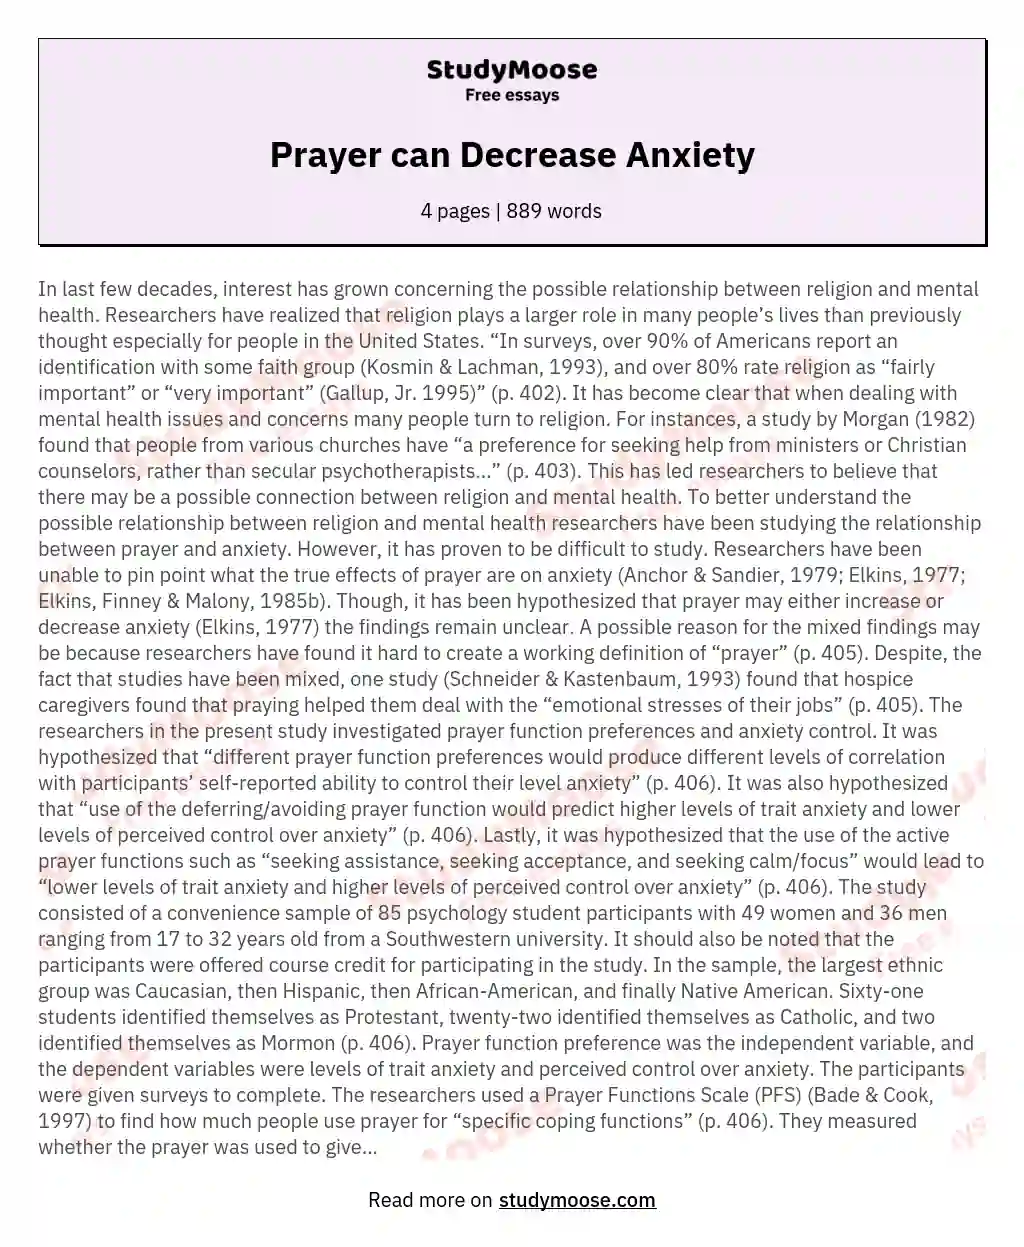 Prayer can Decrease Anxiety essay